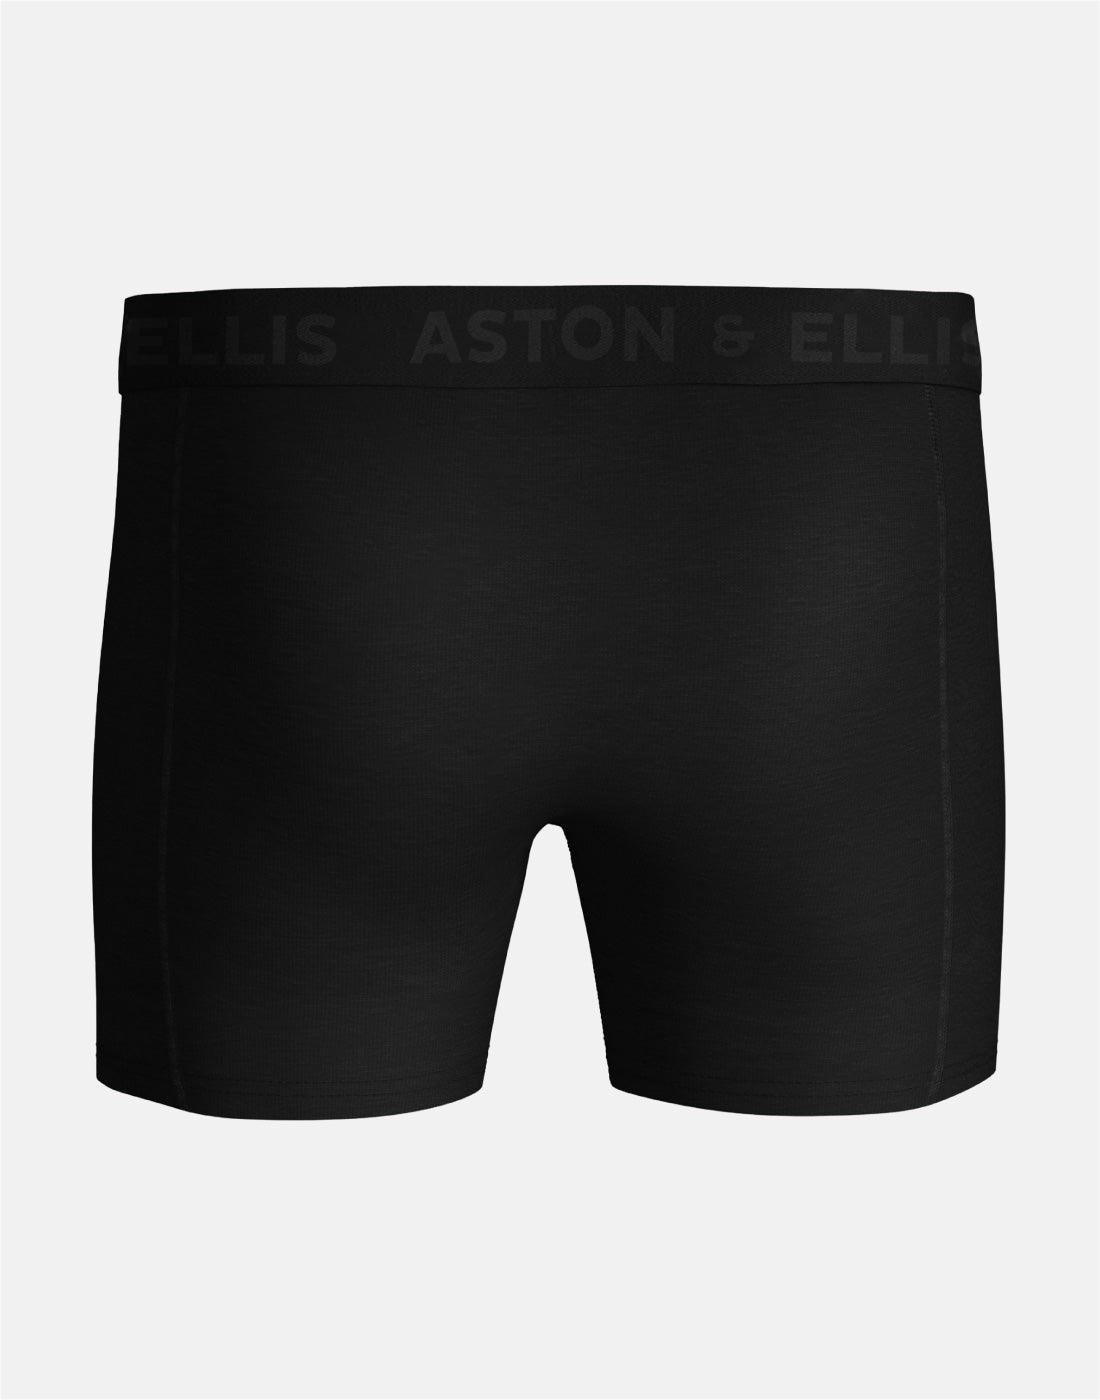 aston-ellis-black-back_boksershorts